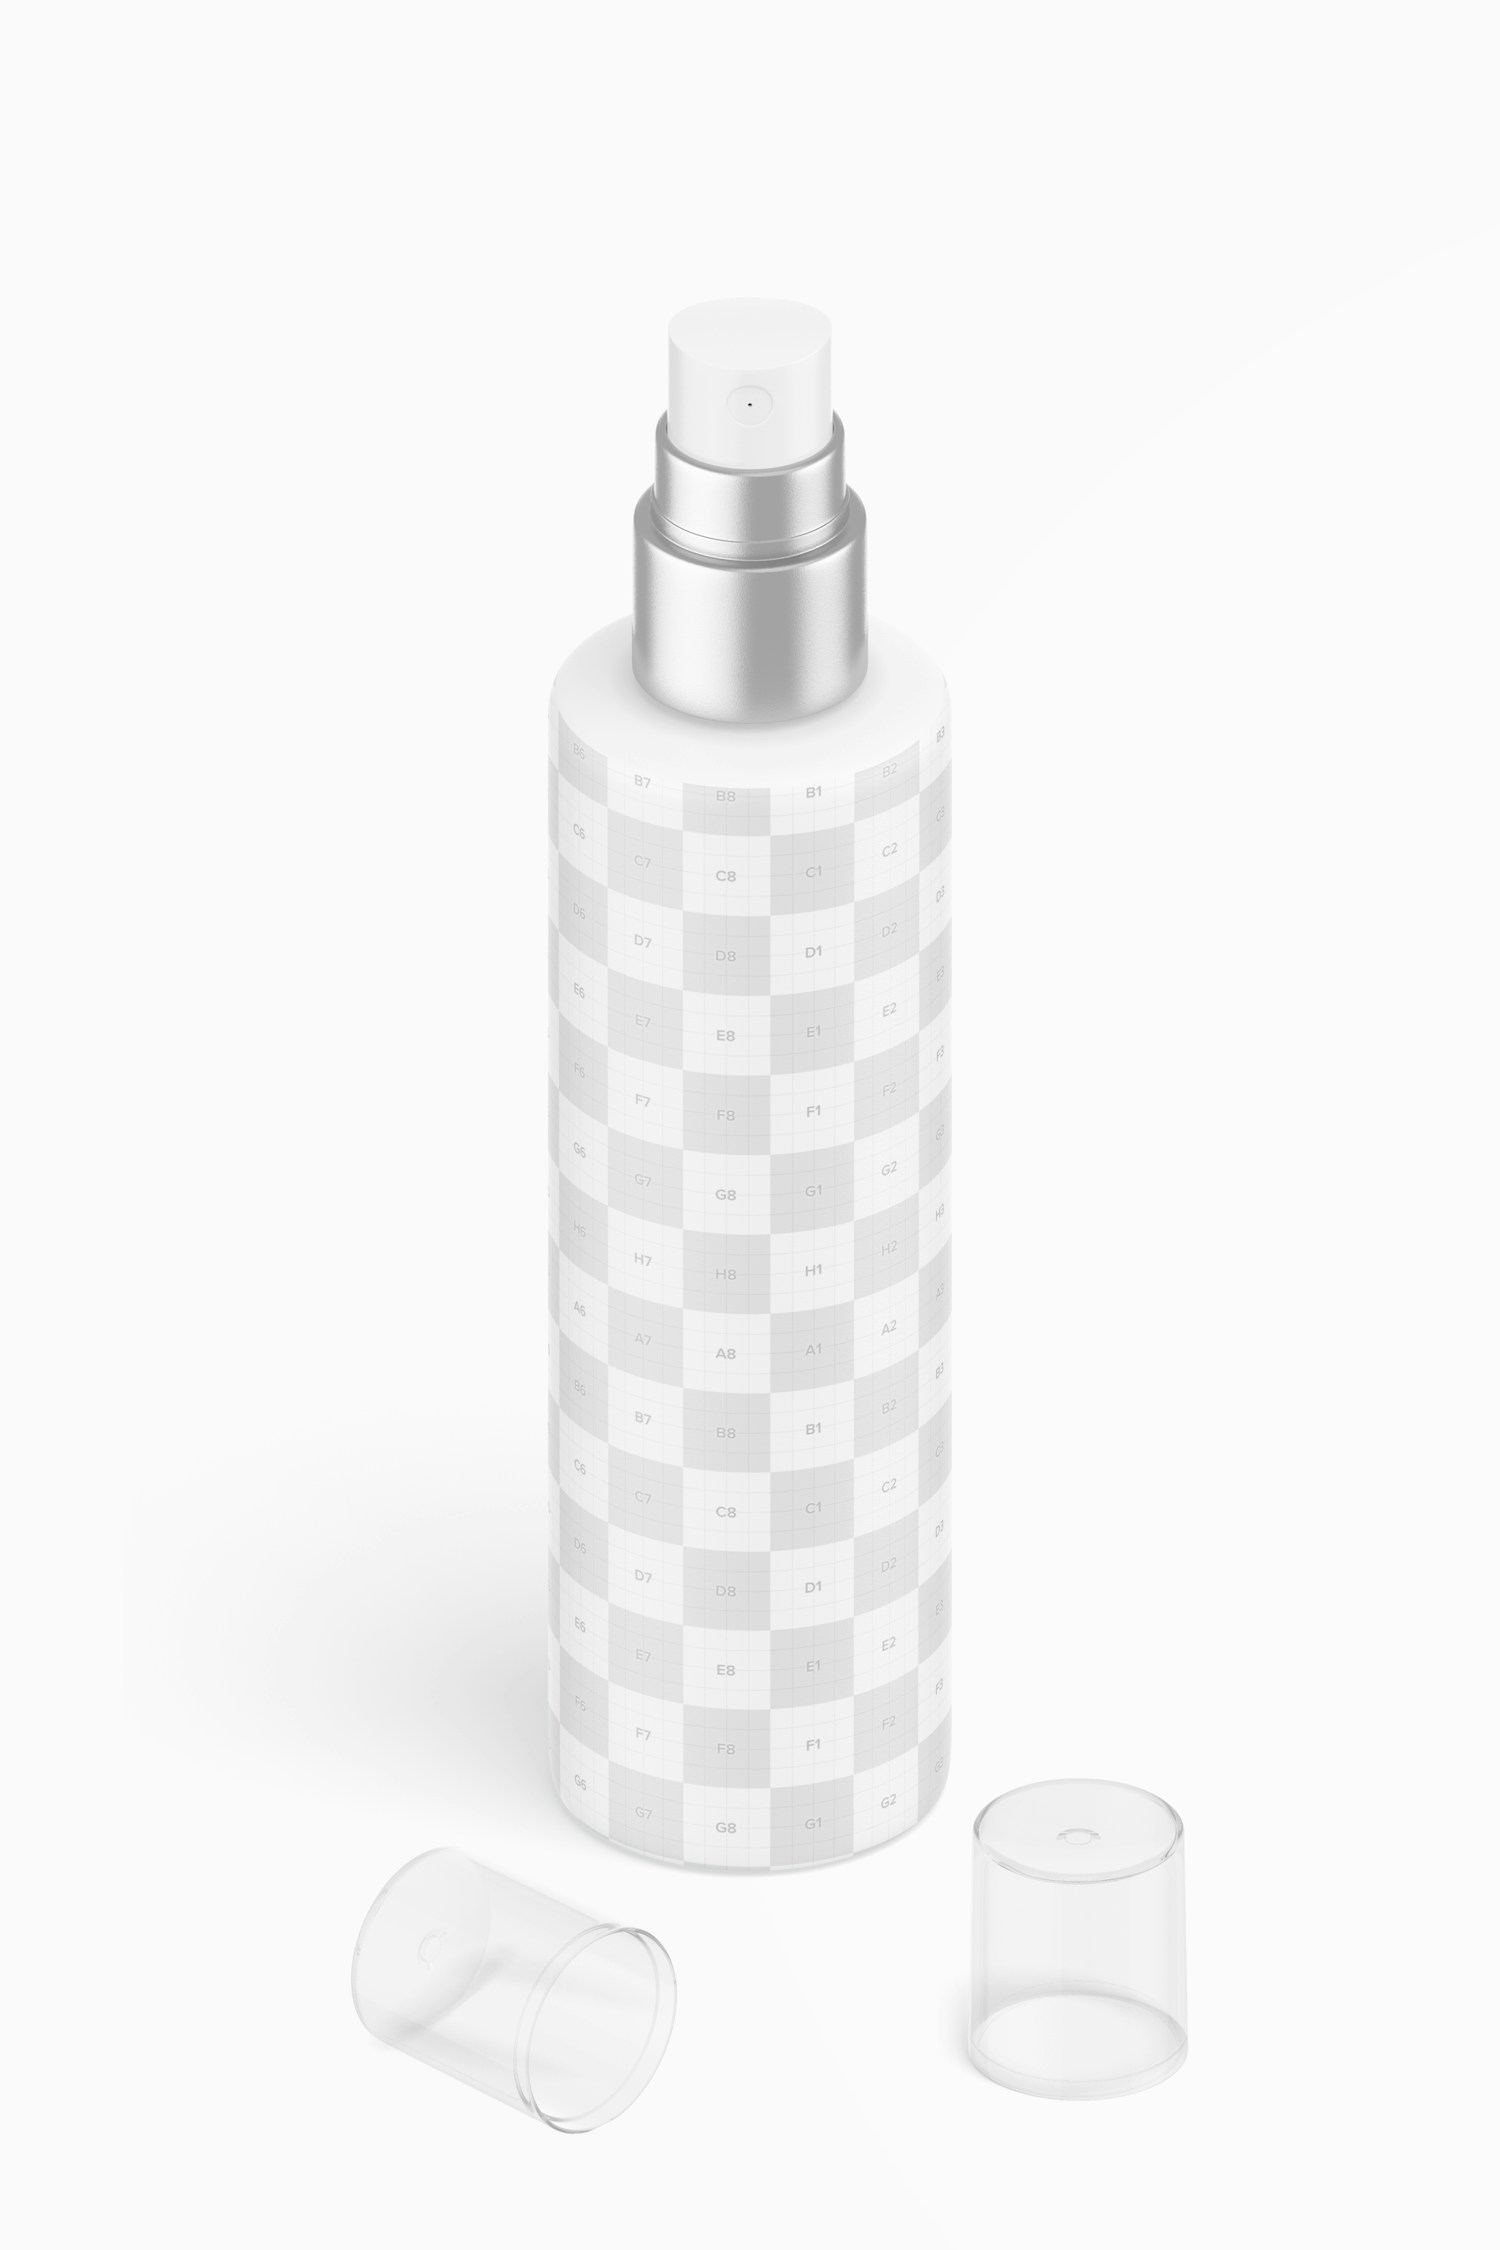 4 Oz Spray Bottle Mockup, Isometric View